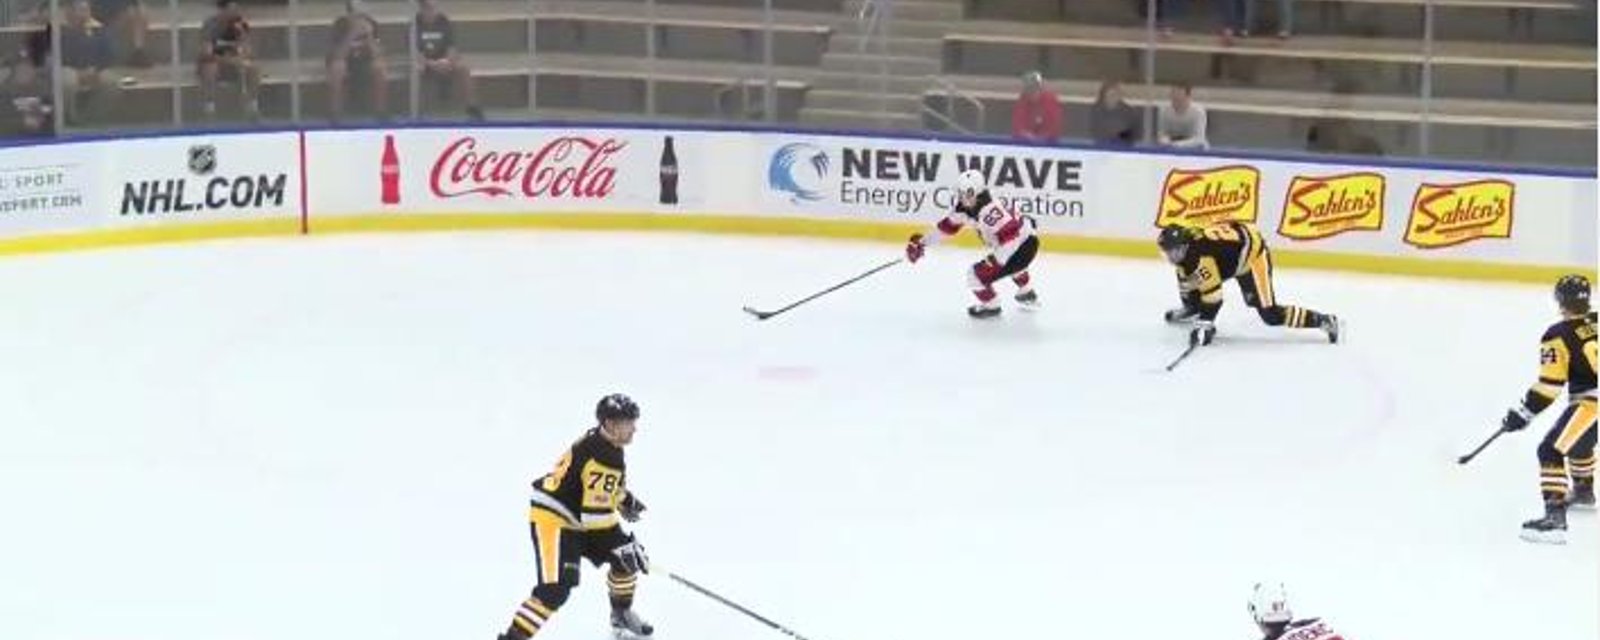 Must See: Jesper Bratt scores filthy goal against Penguins in rookie game